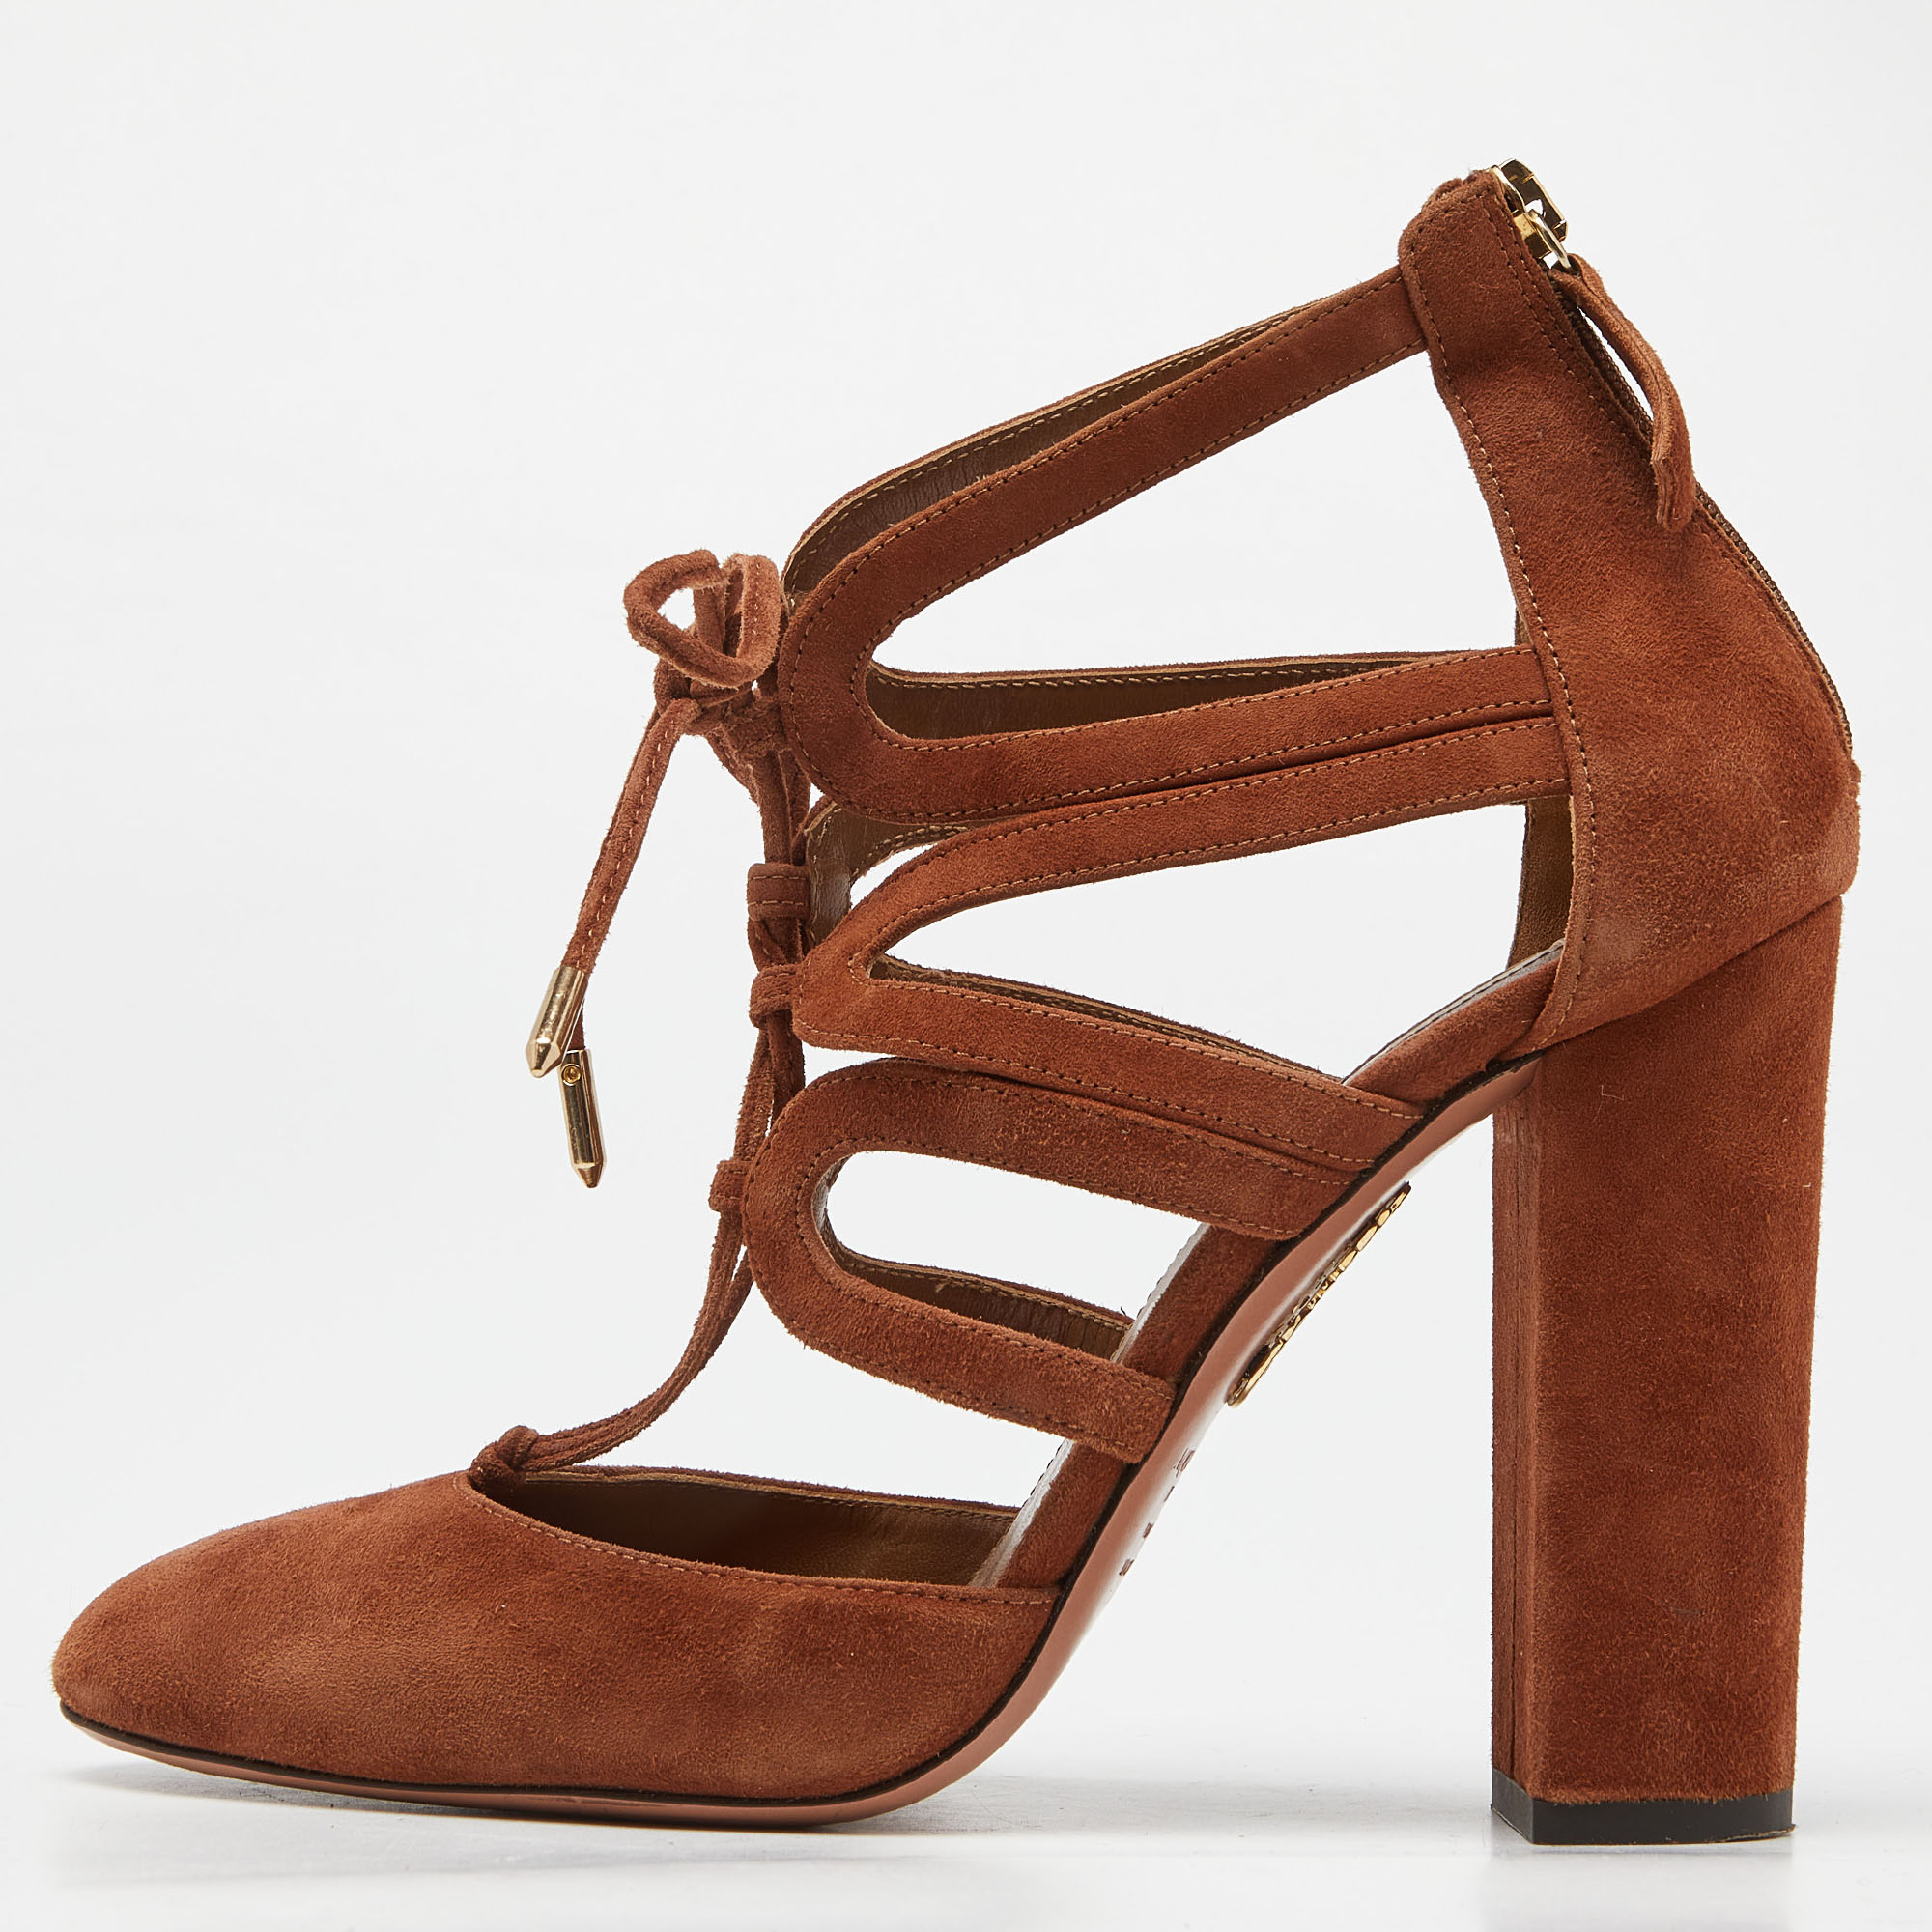 Aquazzura brown suede lace up block heel pumps size 39